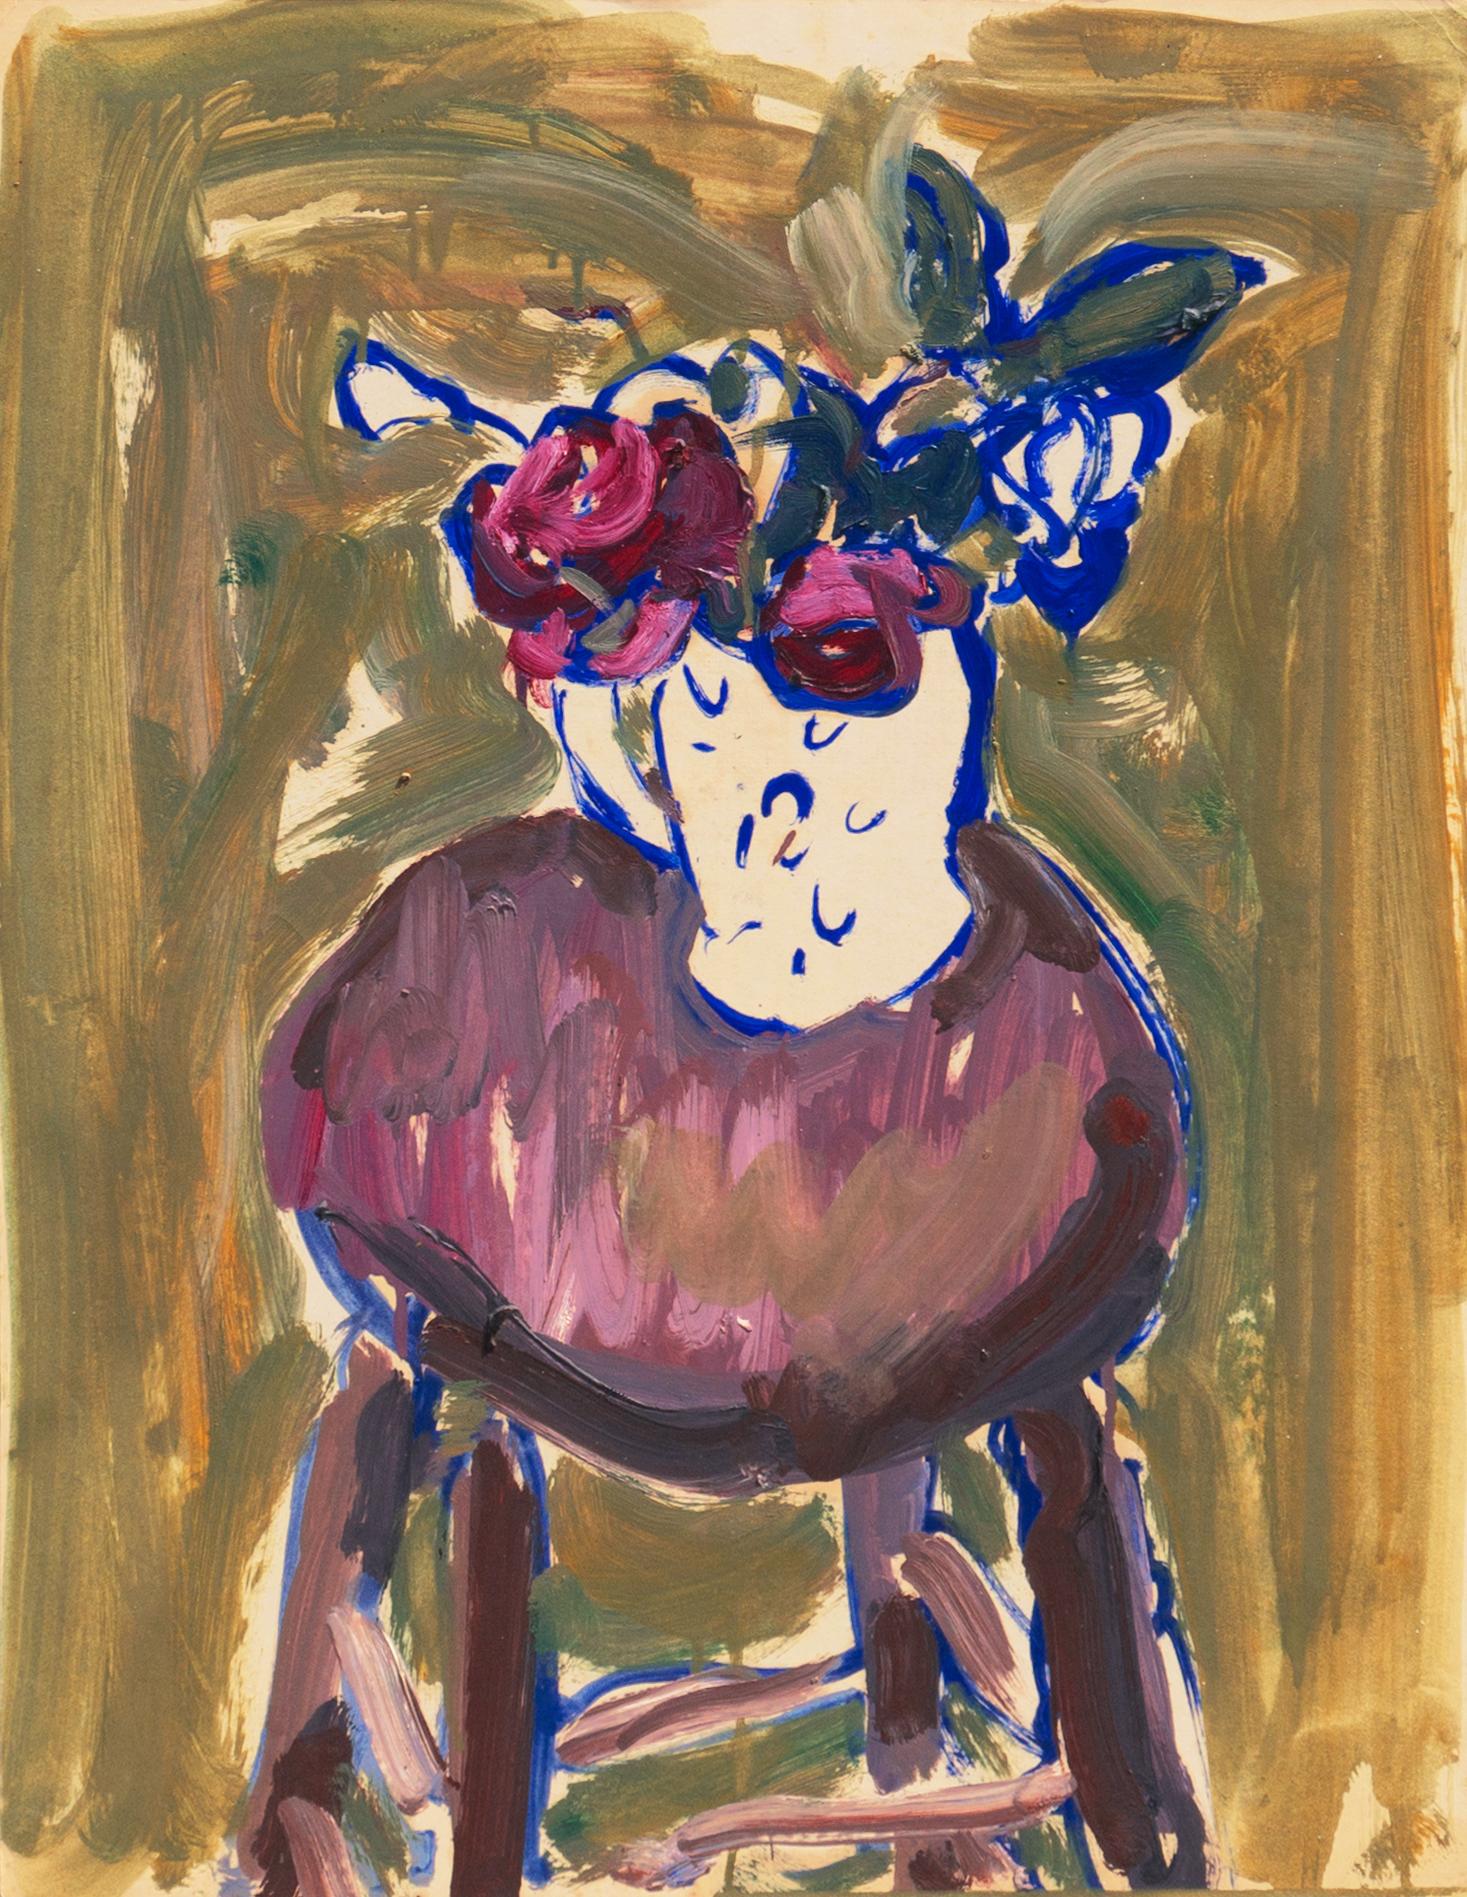 Victor Di Gesu Still-Life Painting - 'Dog Roses in a White Jug', Louvre, Salon d'Automne, Académie Chaumière, LACMA